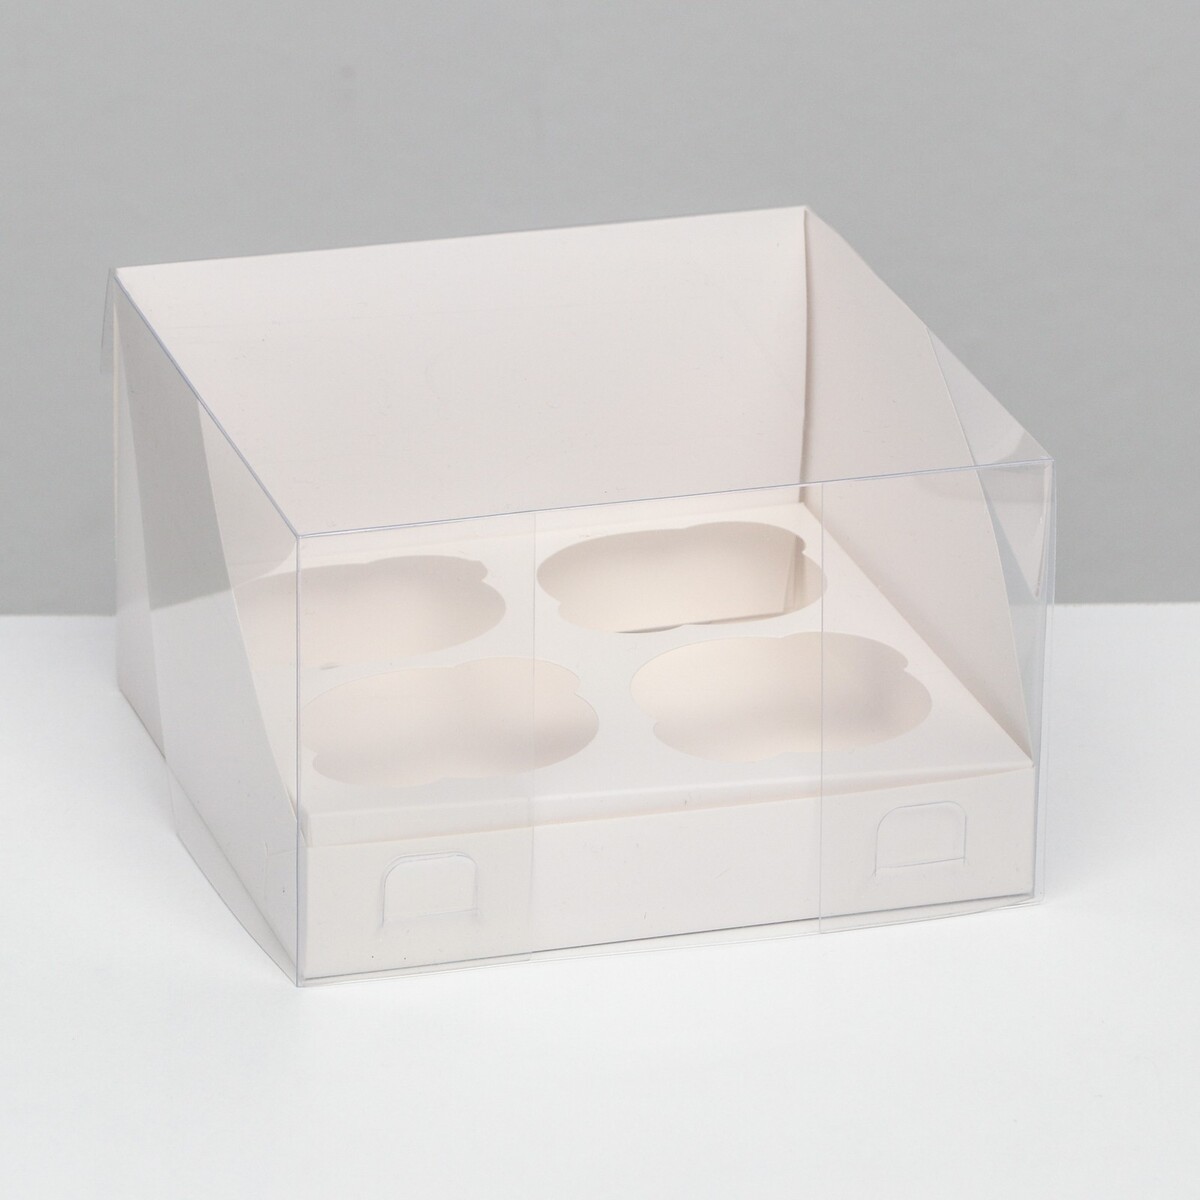 Кондитерская складная коробка для 4 капкейков, белая 16 х 16 х 14 см коробка для десерта белая 10 х 10 х 6 5 см